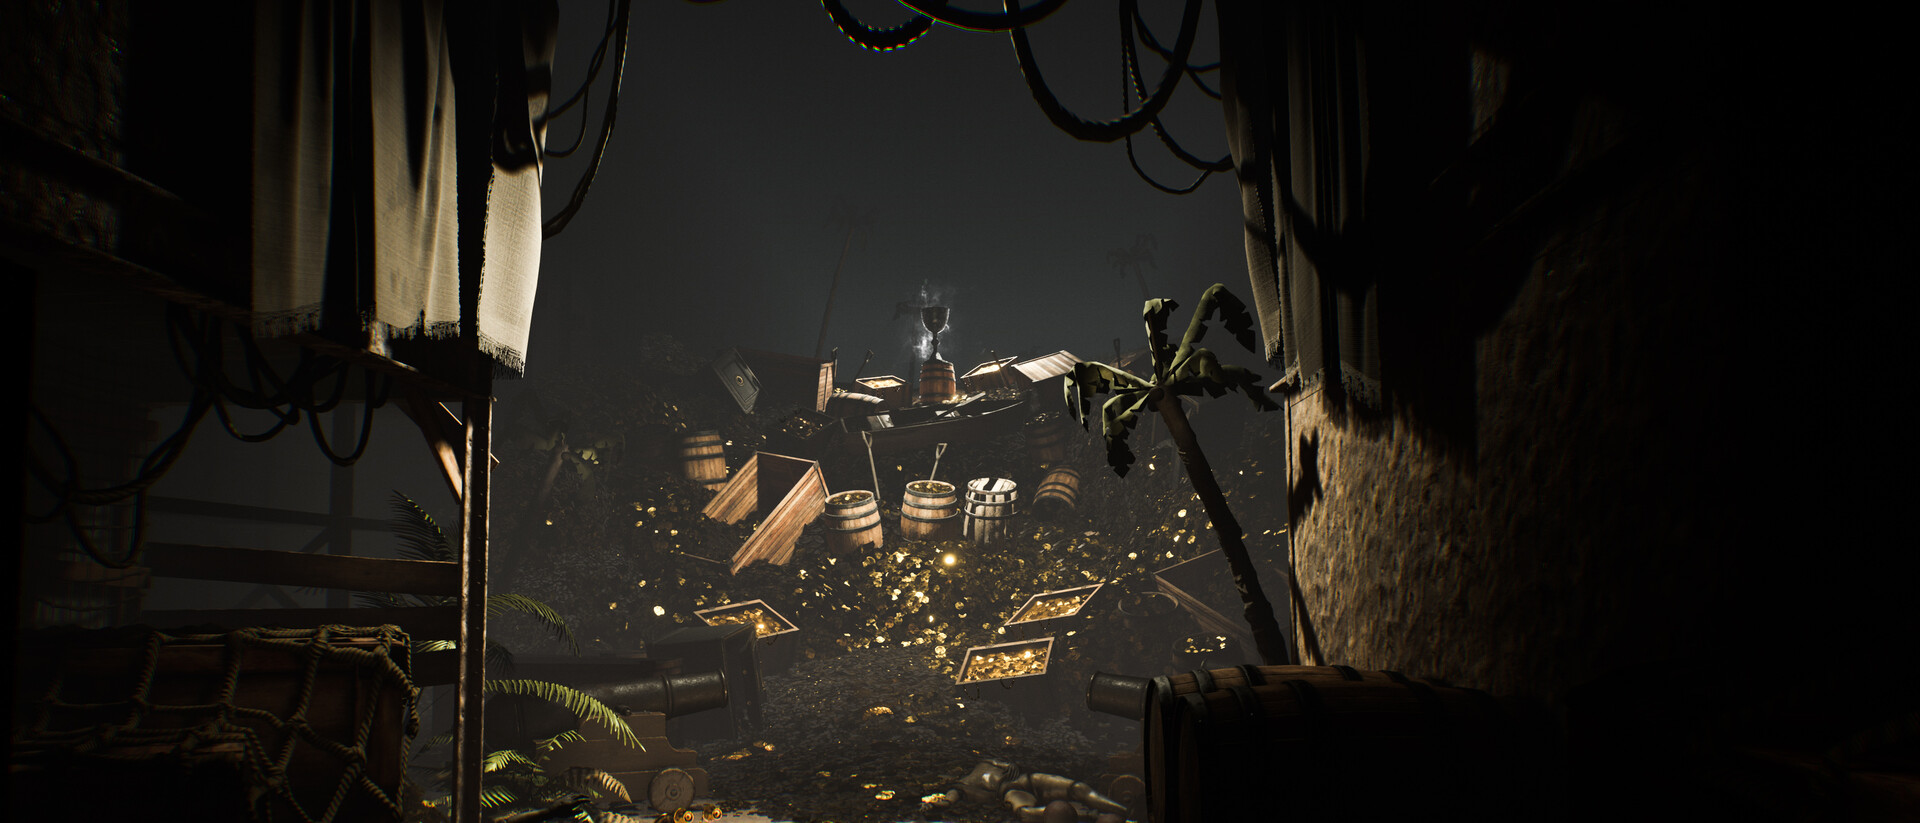 Layers of Fear 2 screenshots - Image #27298